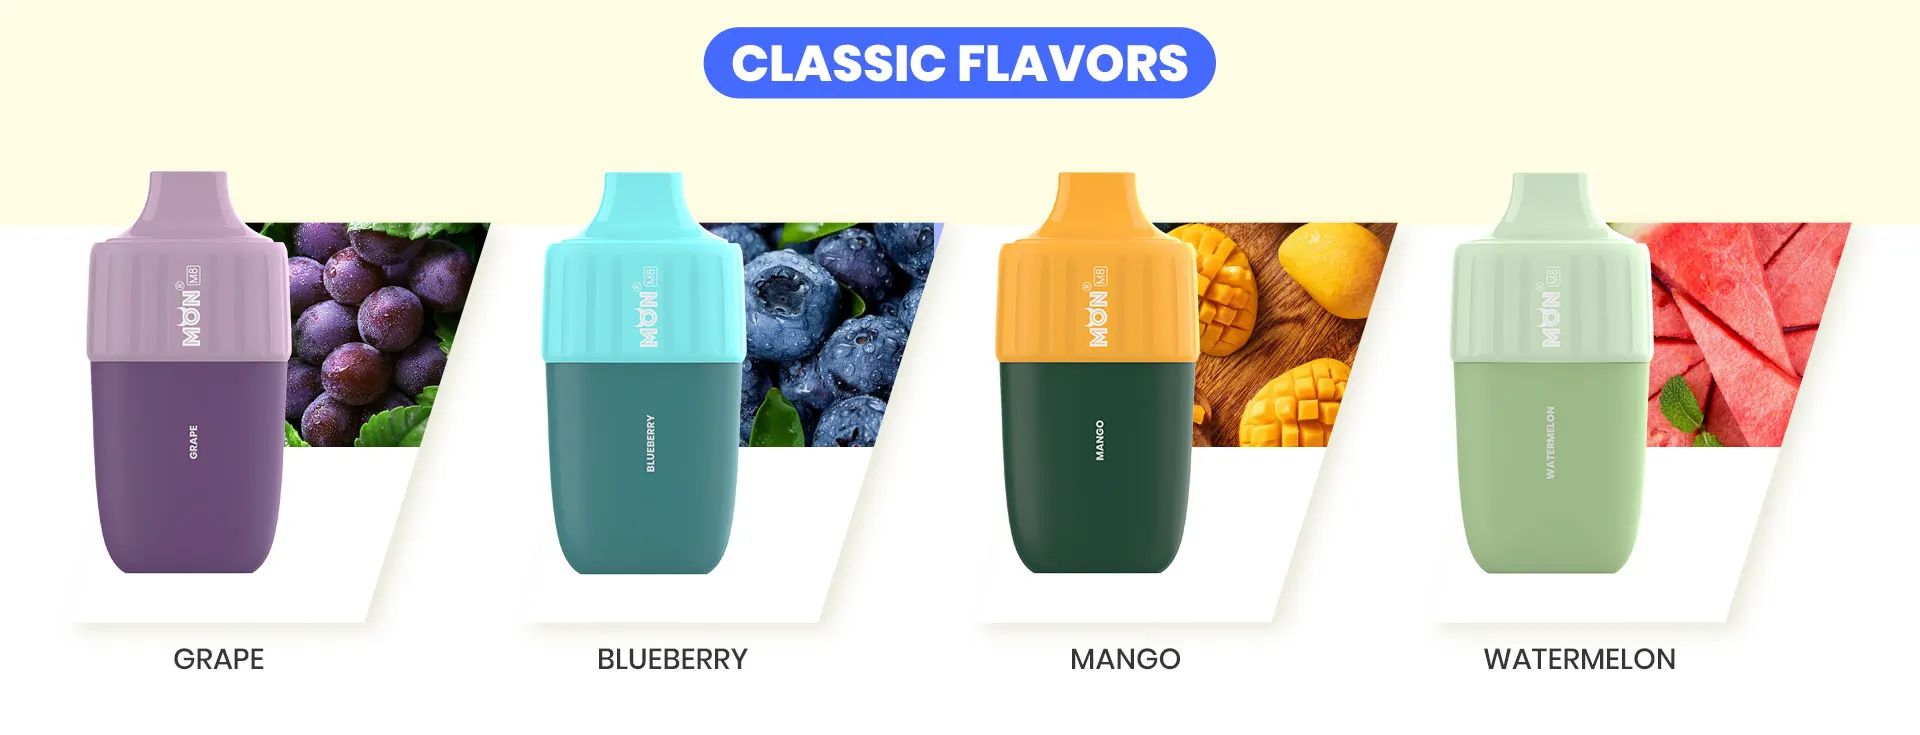 M8 classic flavors